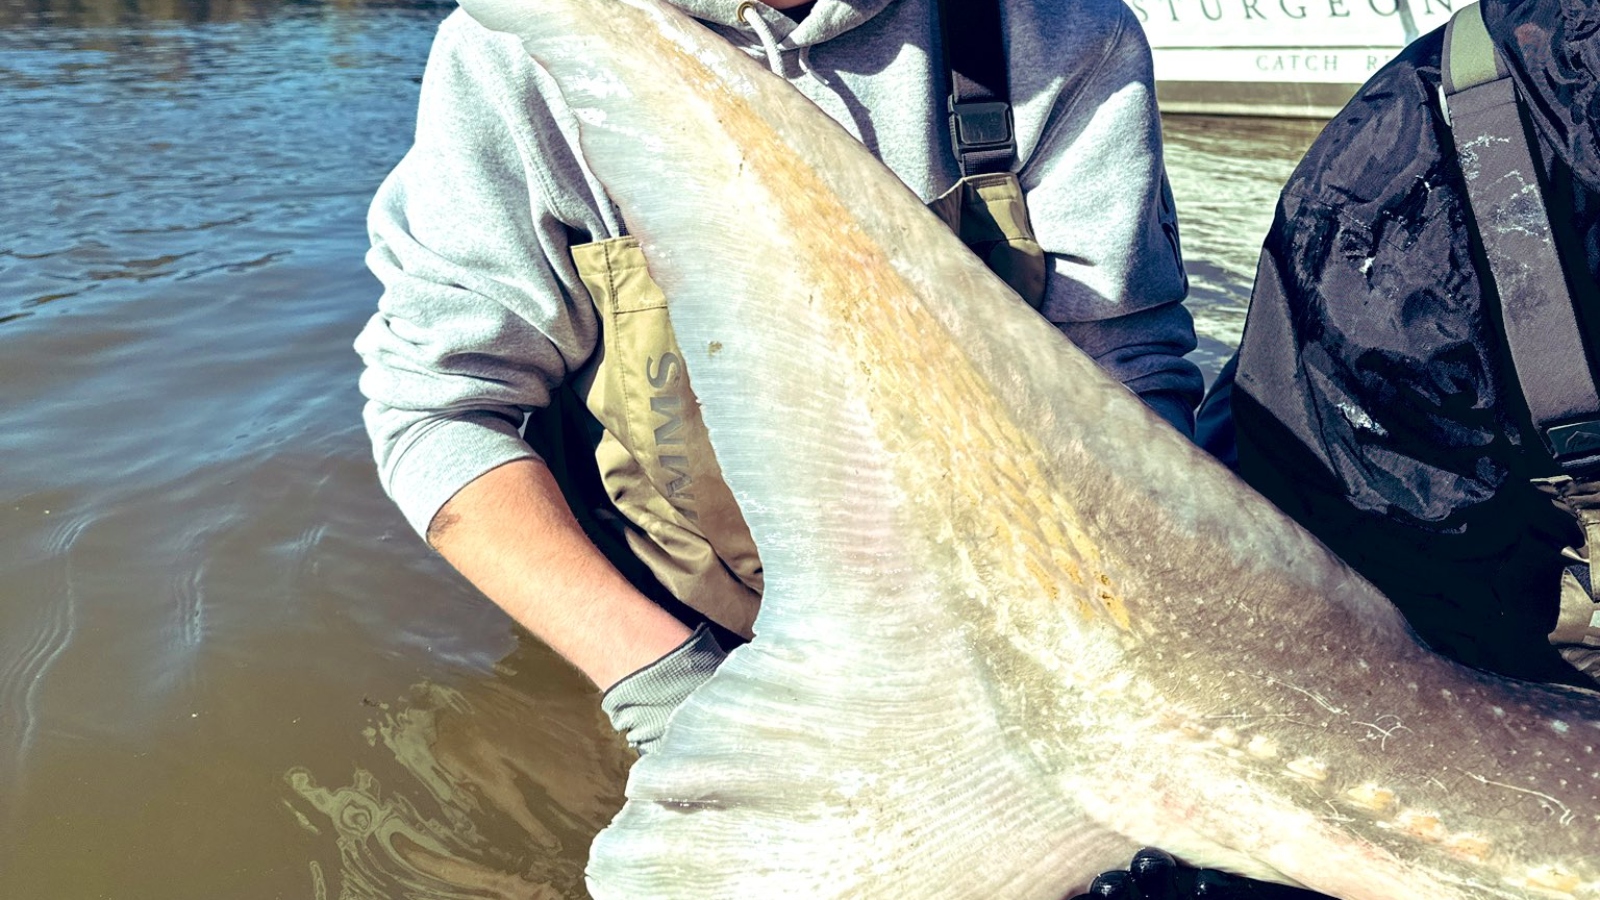 massive sturgeon caught fishing on the Fraser River